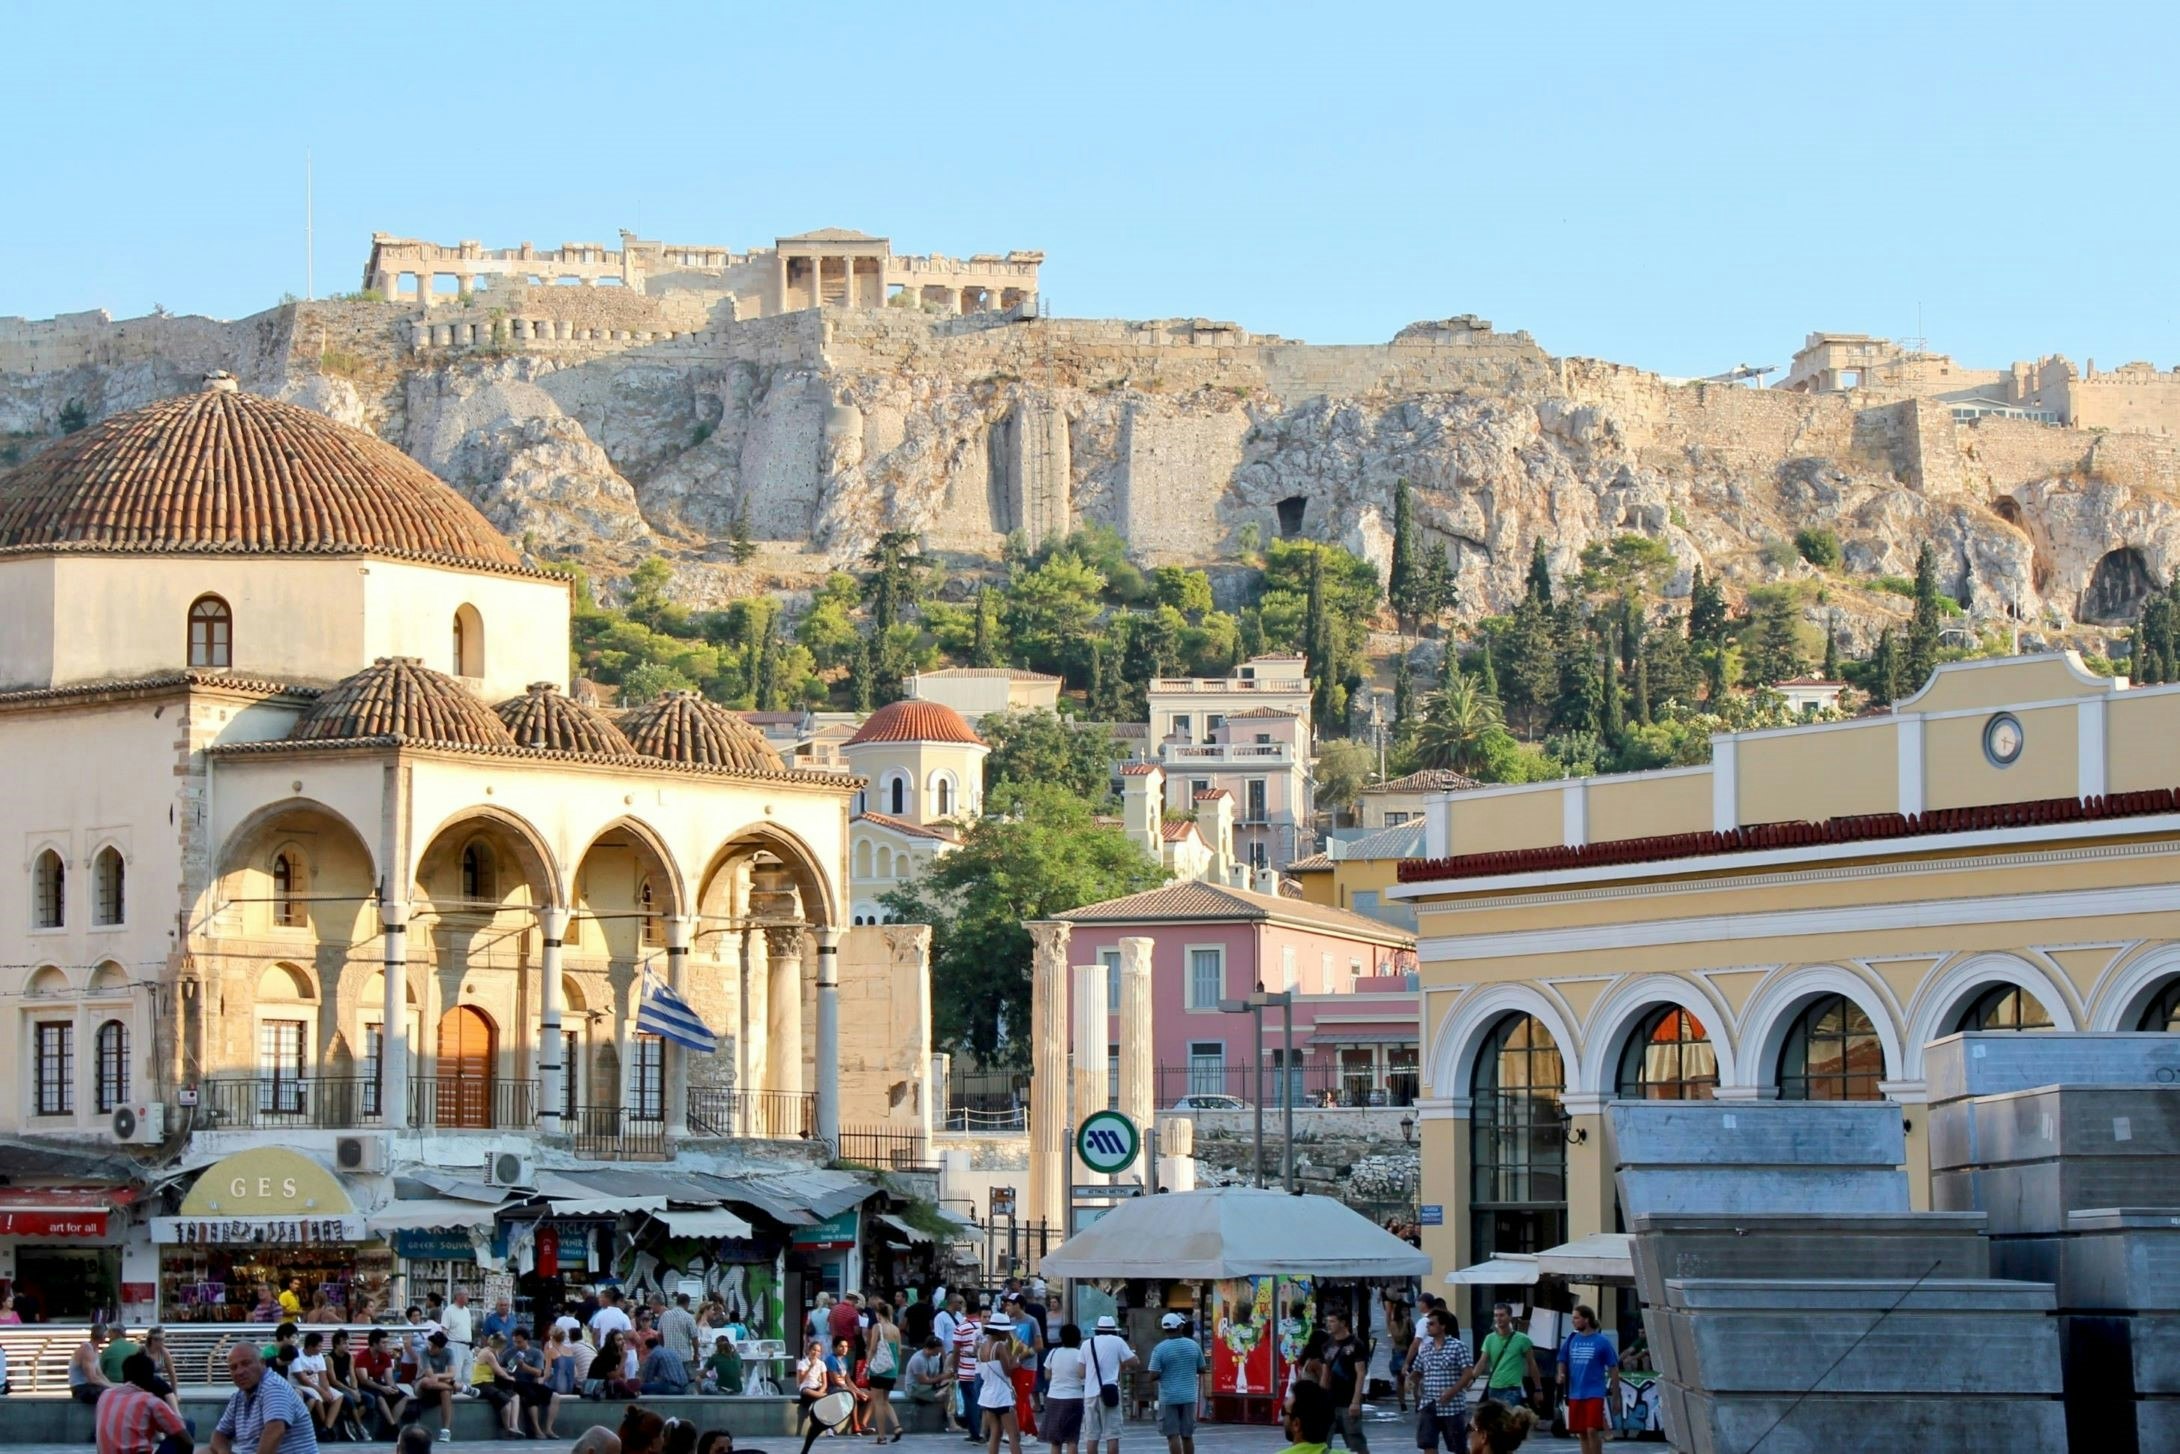 Greece: The Parthenon and the Peloponnesian Peninsula